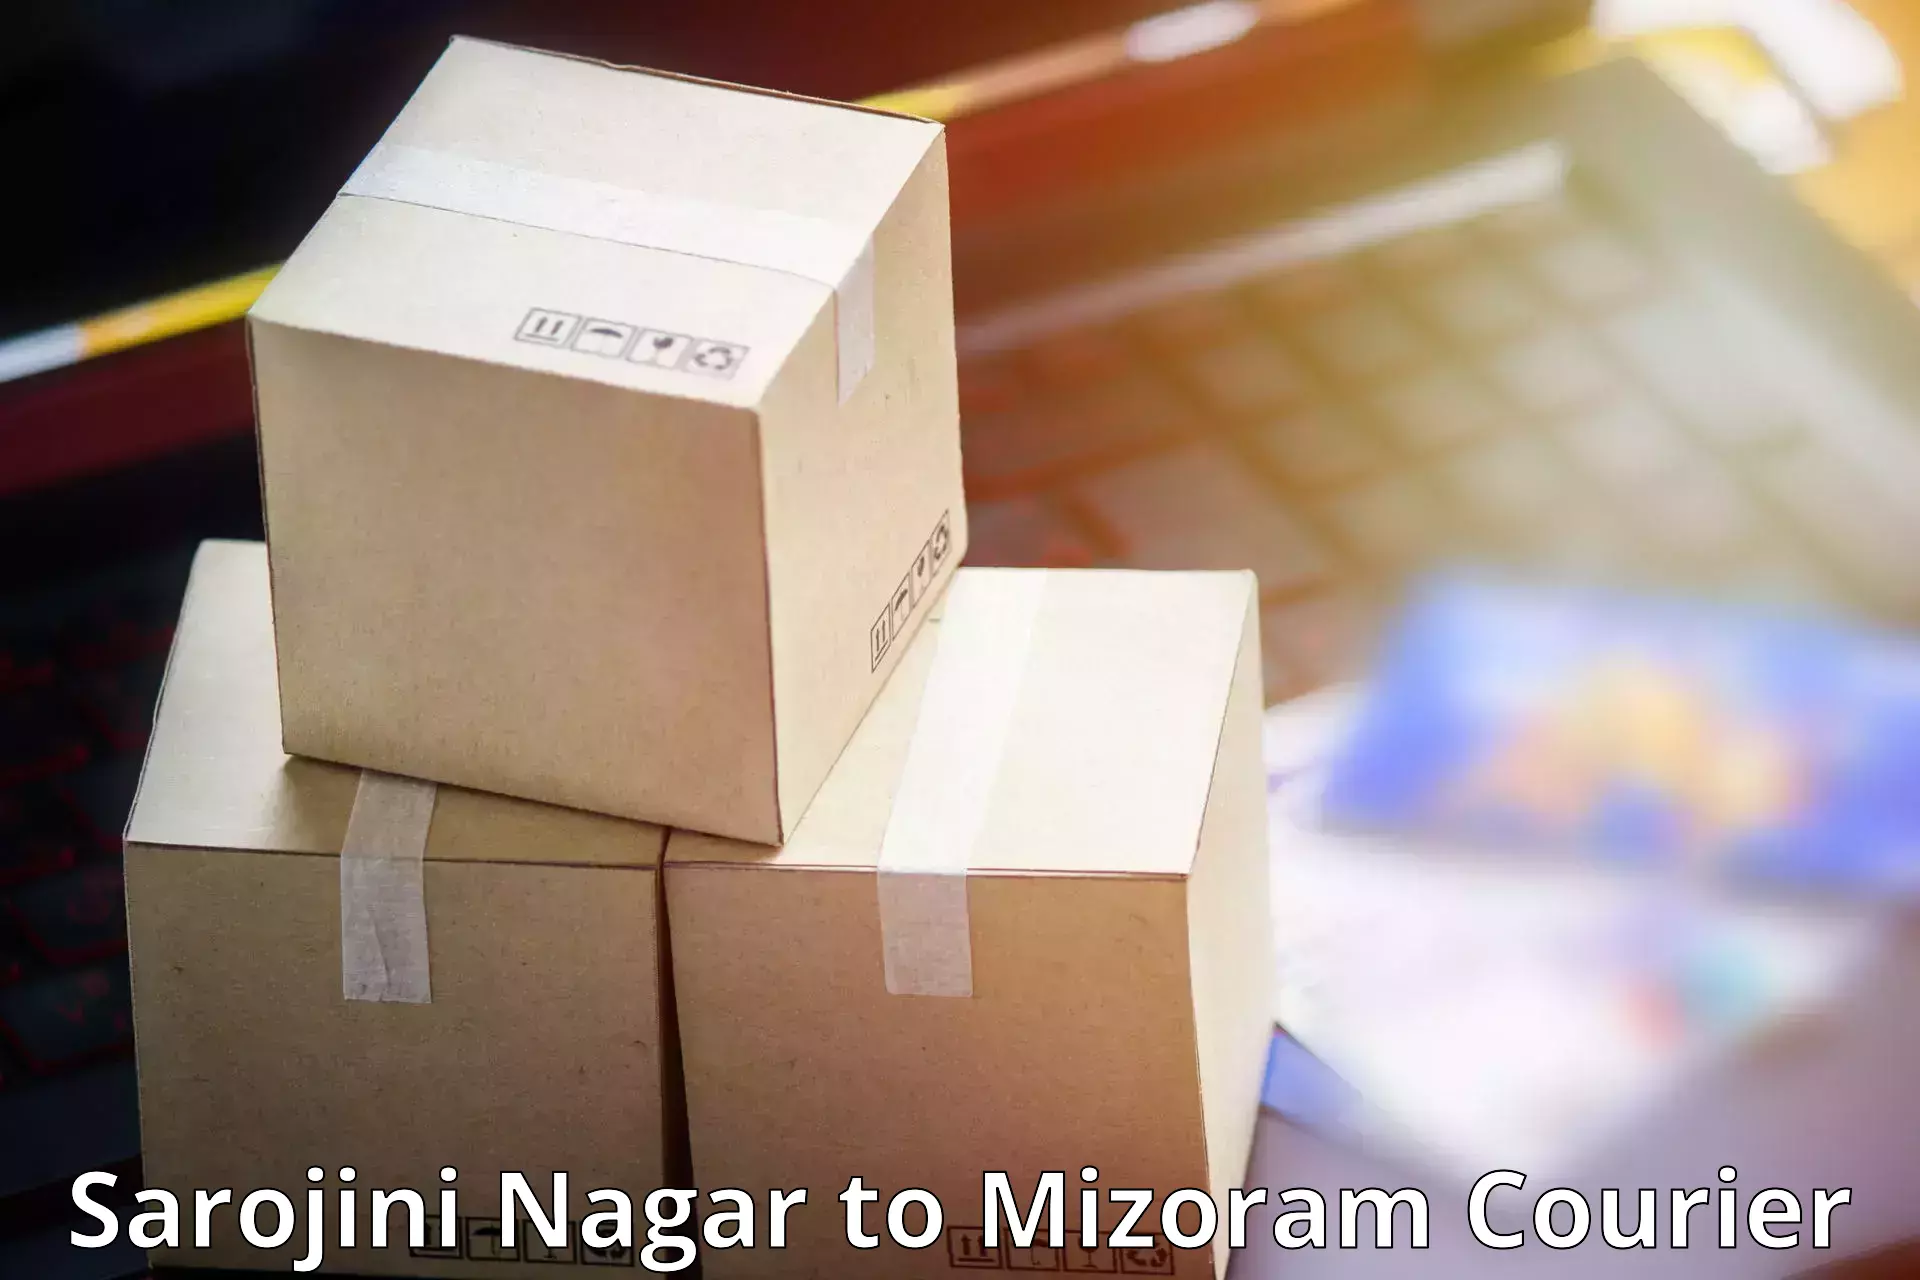 Professional courier handling Sarojini Nagar to Siaha